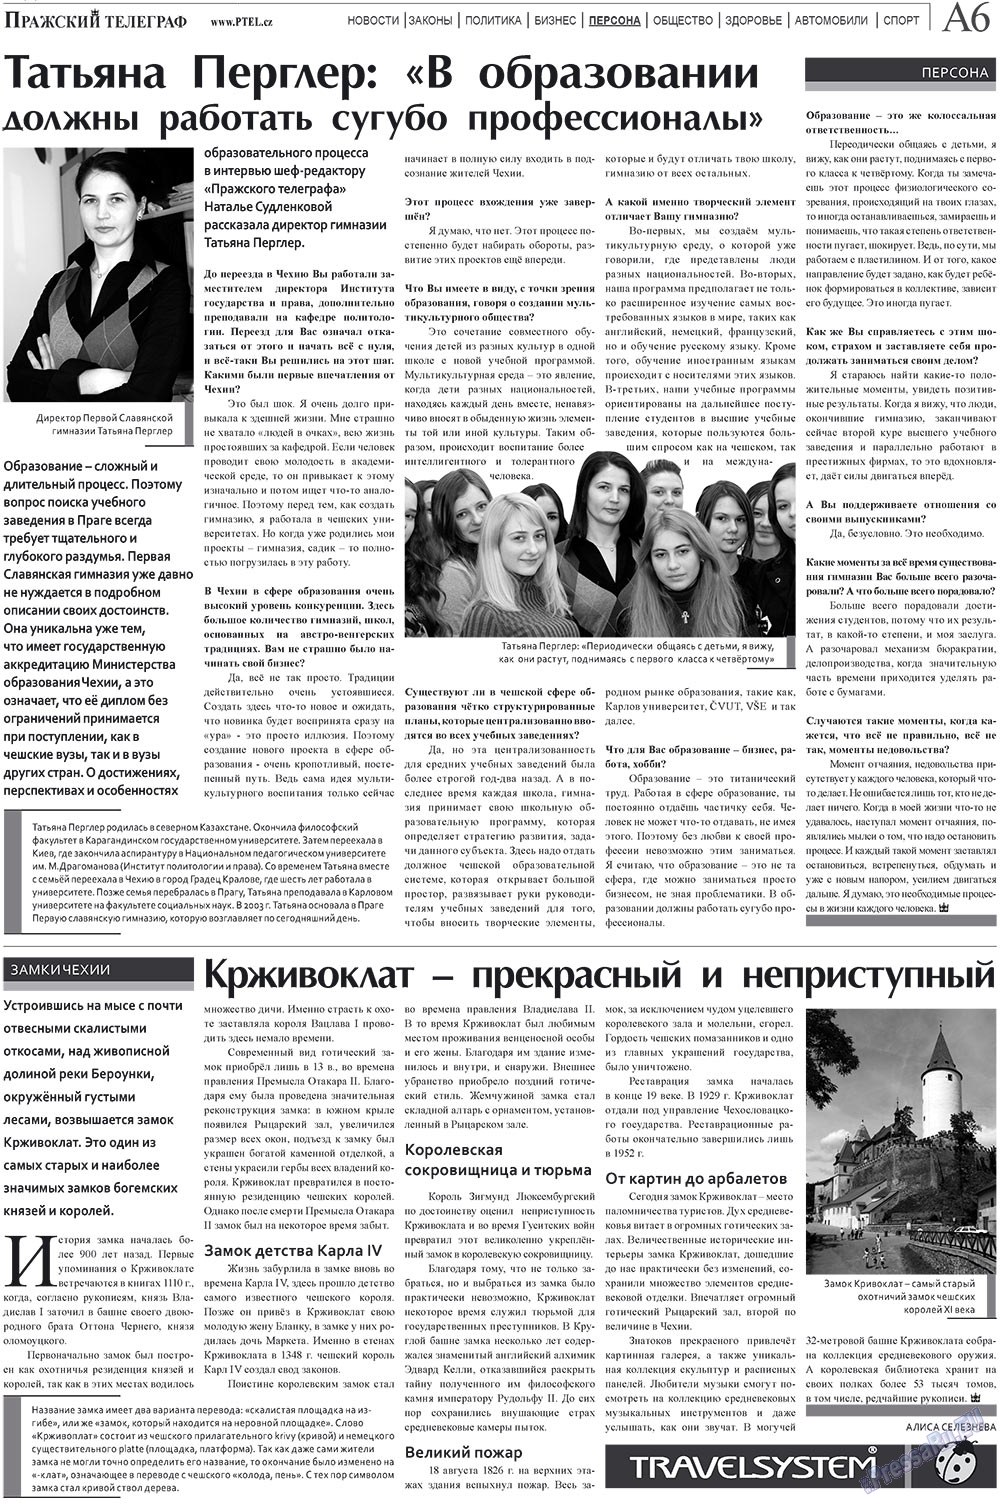 Пражский телеграф, газета. 2010 №9 стр.6